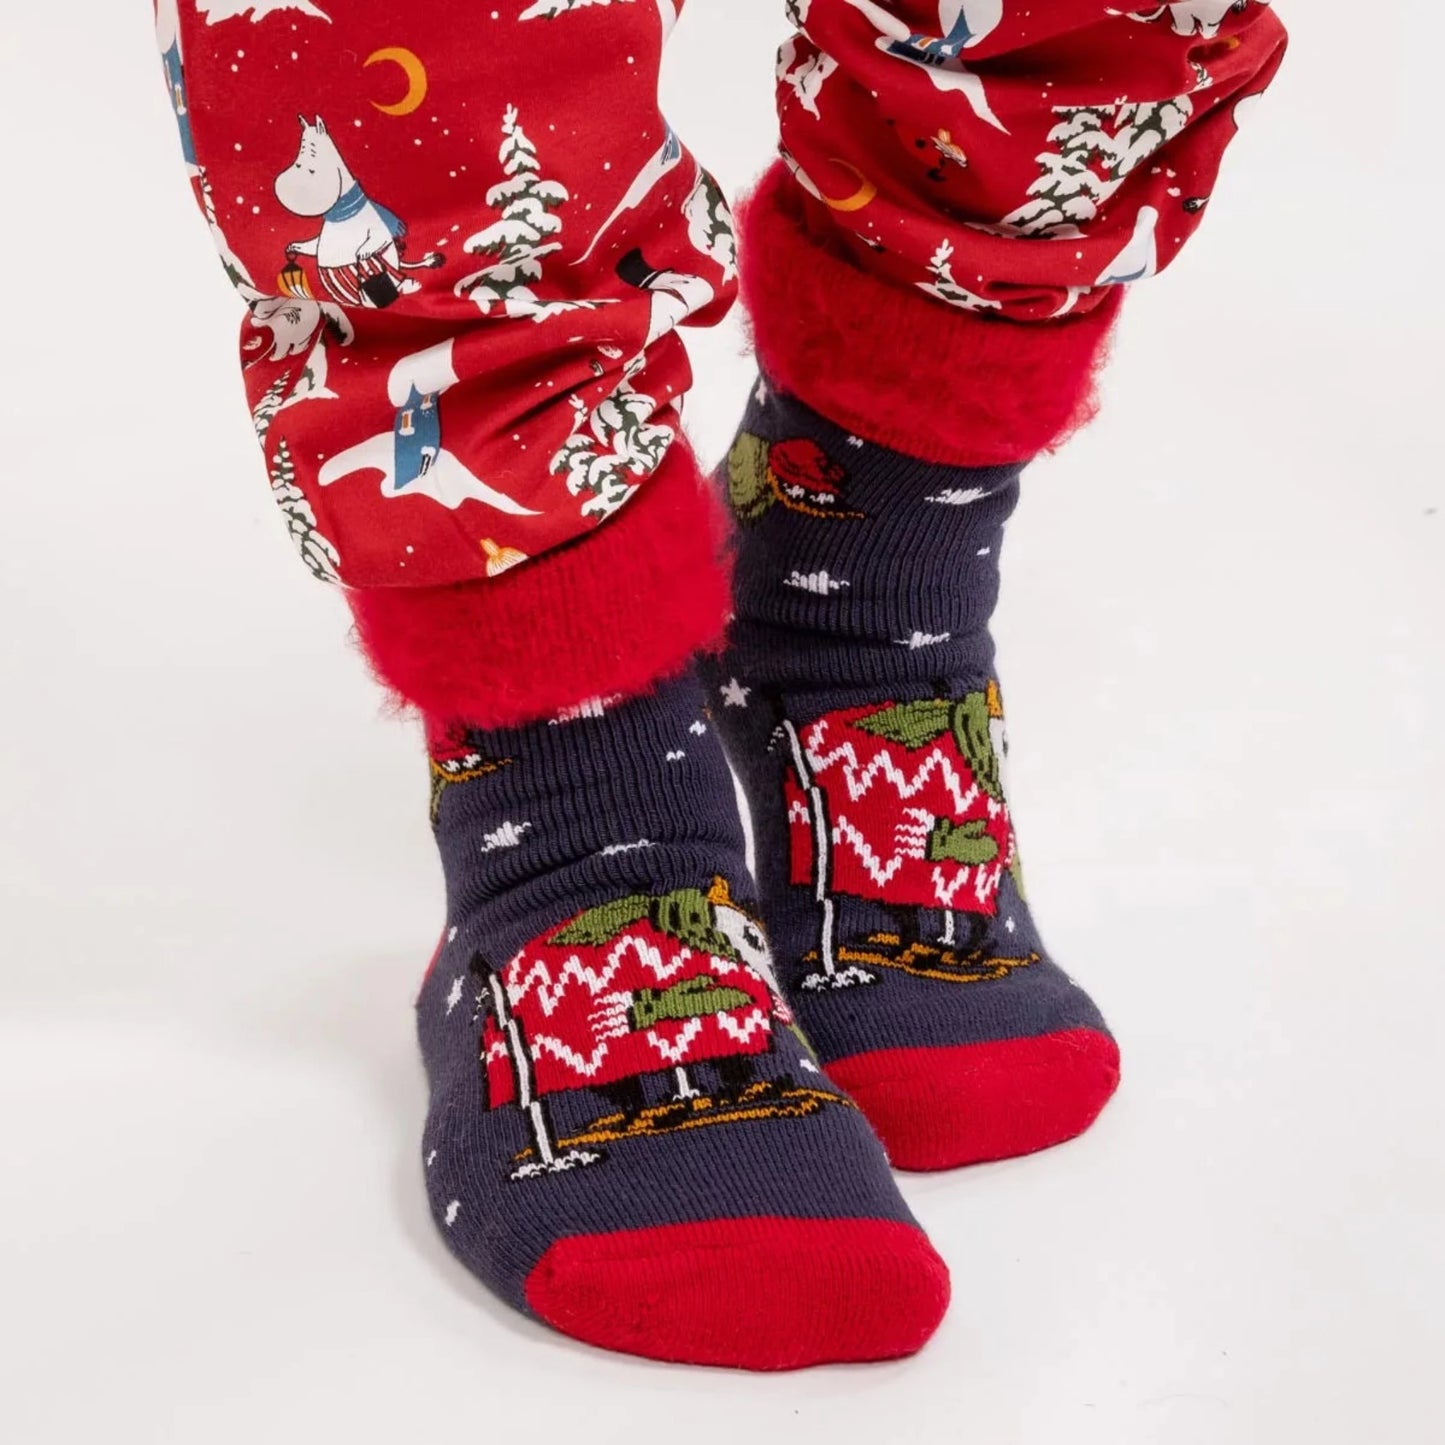 Moomin Sorry-Oo Kids Fluffy Socks, Dark Blue (8745666412831)